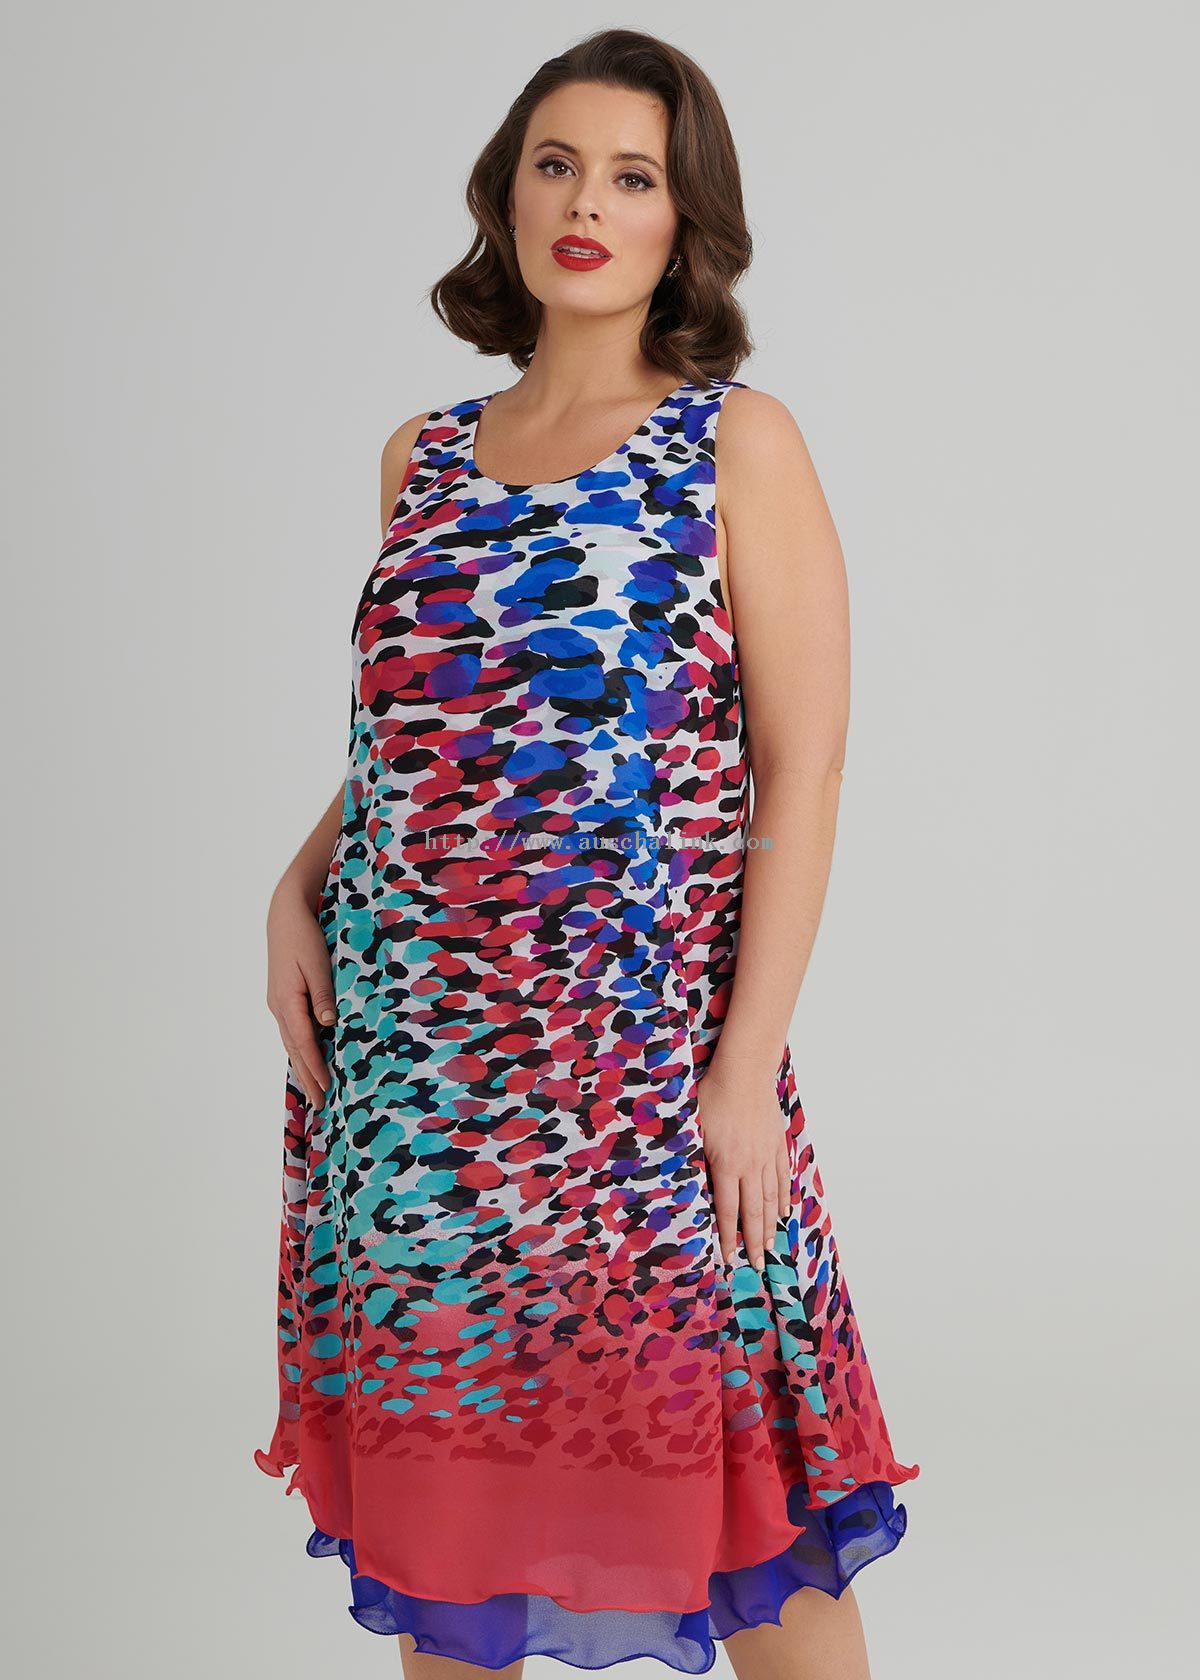 Monet Cocktail Dress